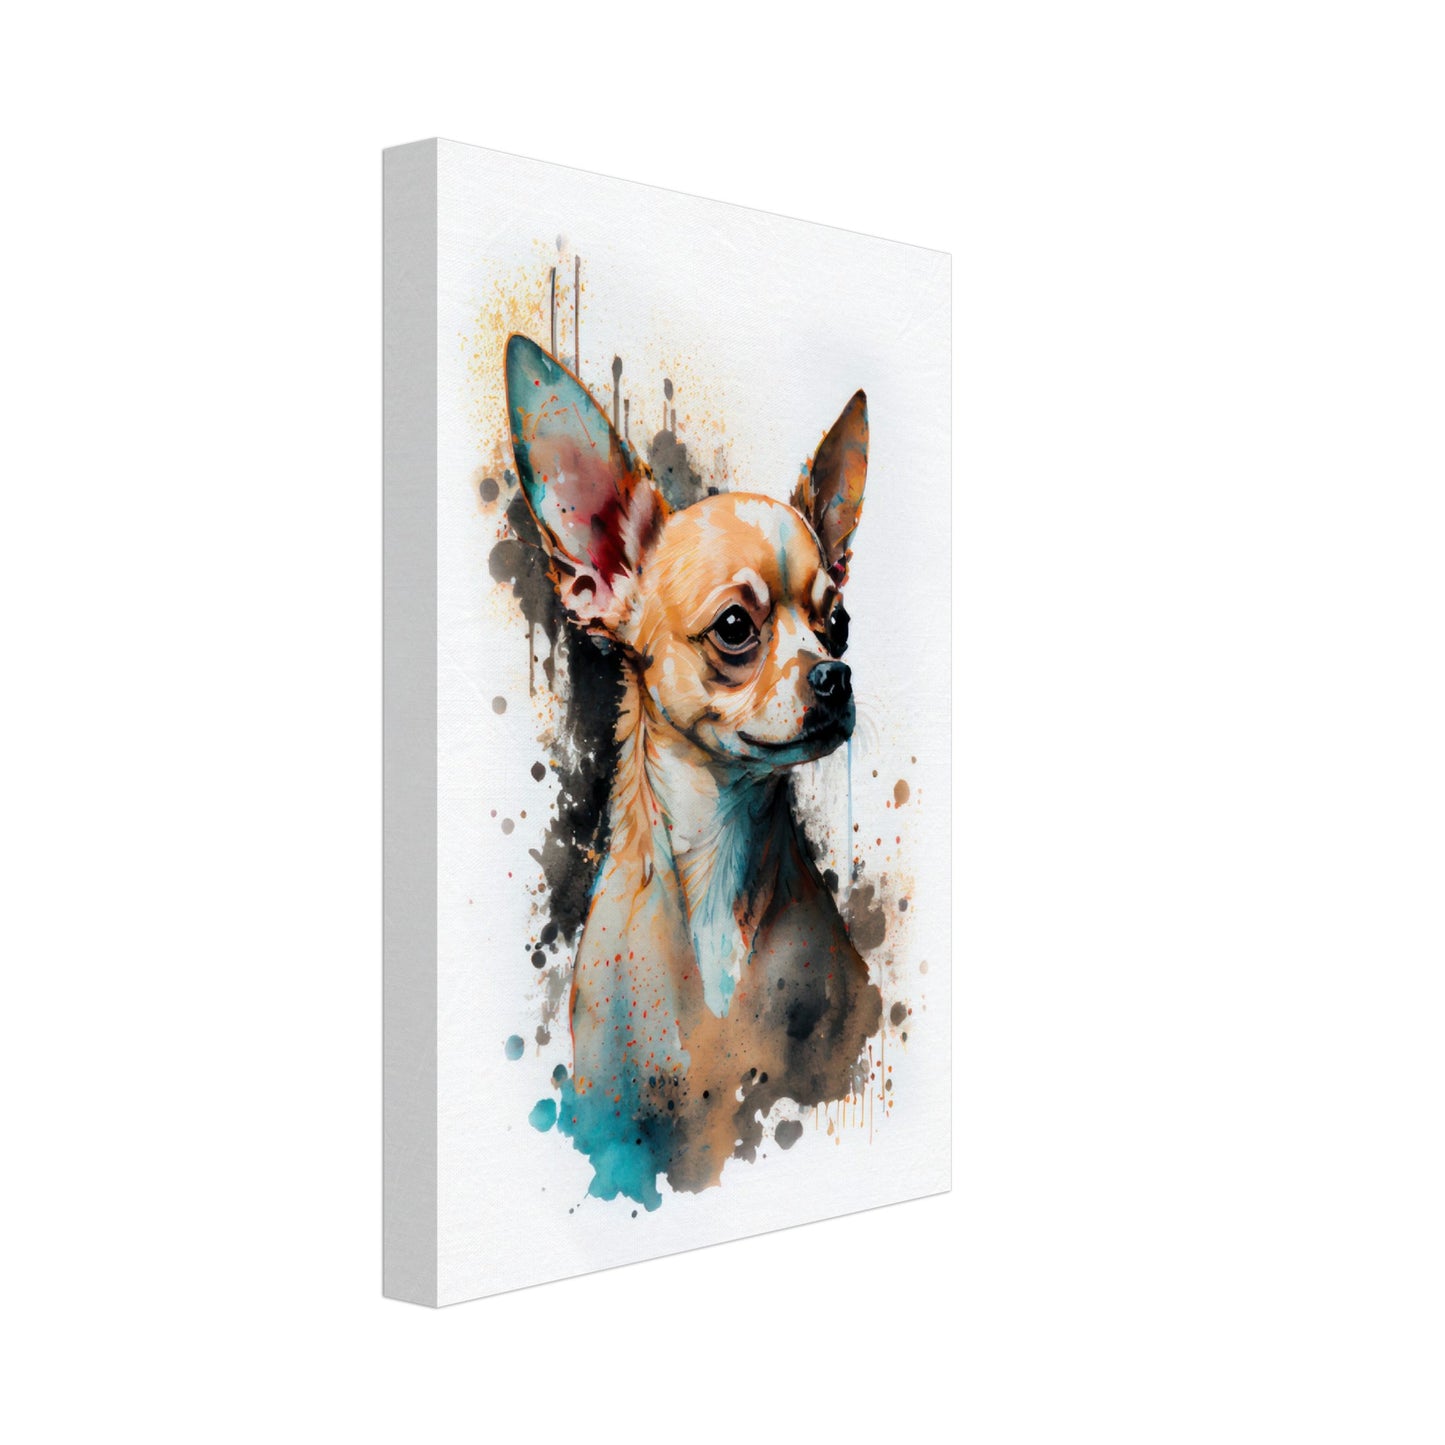 Chihuahua Charlie - Hunde Wandbild - Dogs Art Leinwand WaterColors im Hochformat - Hundebilder Hundeportrait Tiere Tierbilder Kunstdruck Aquarell